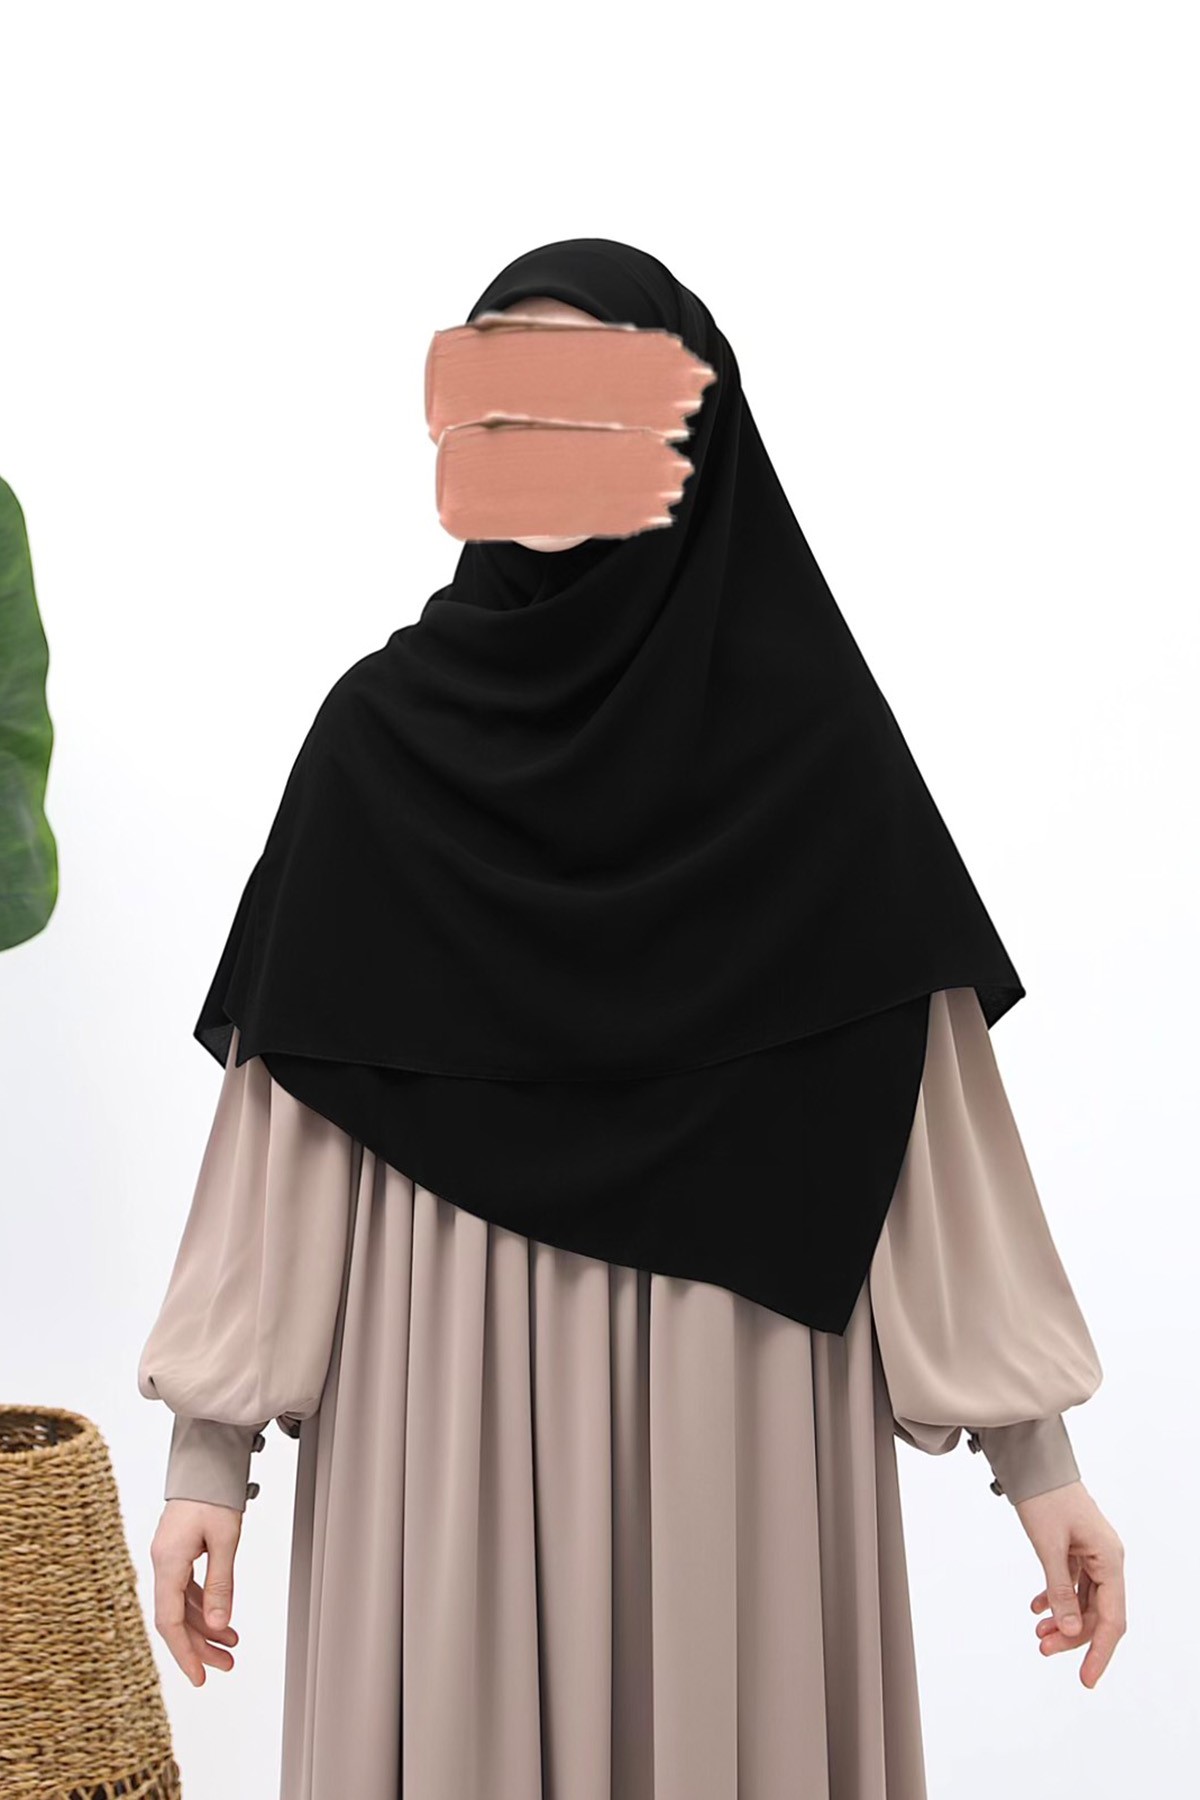 Square Hijab - Black